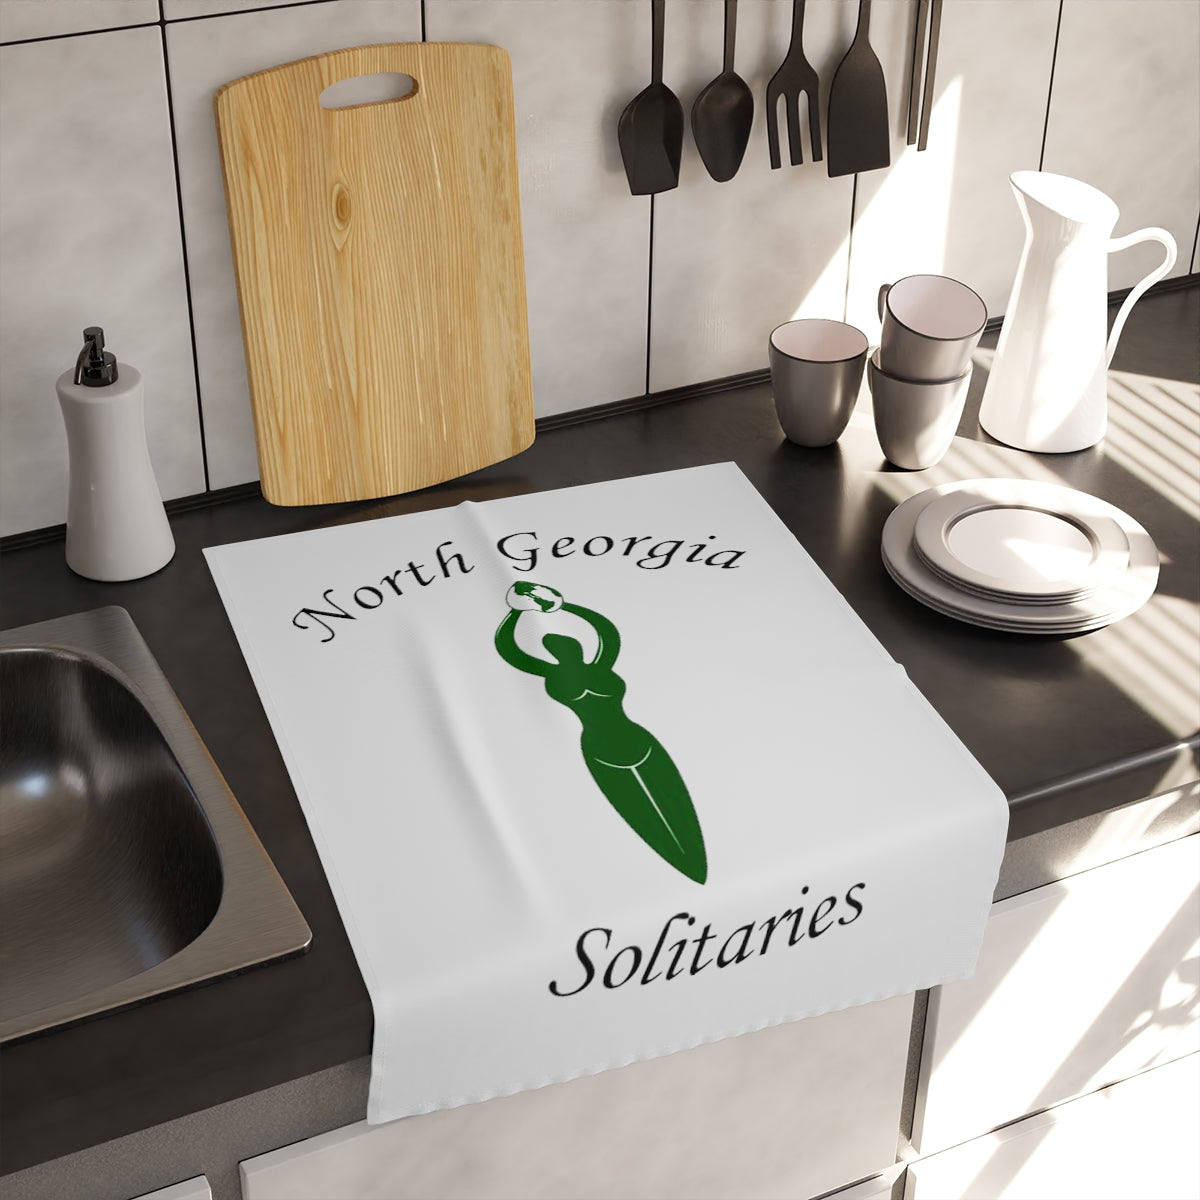 North Georgia Solitaries Tea & Kitchen Towel